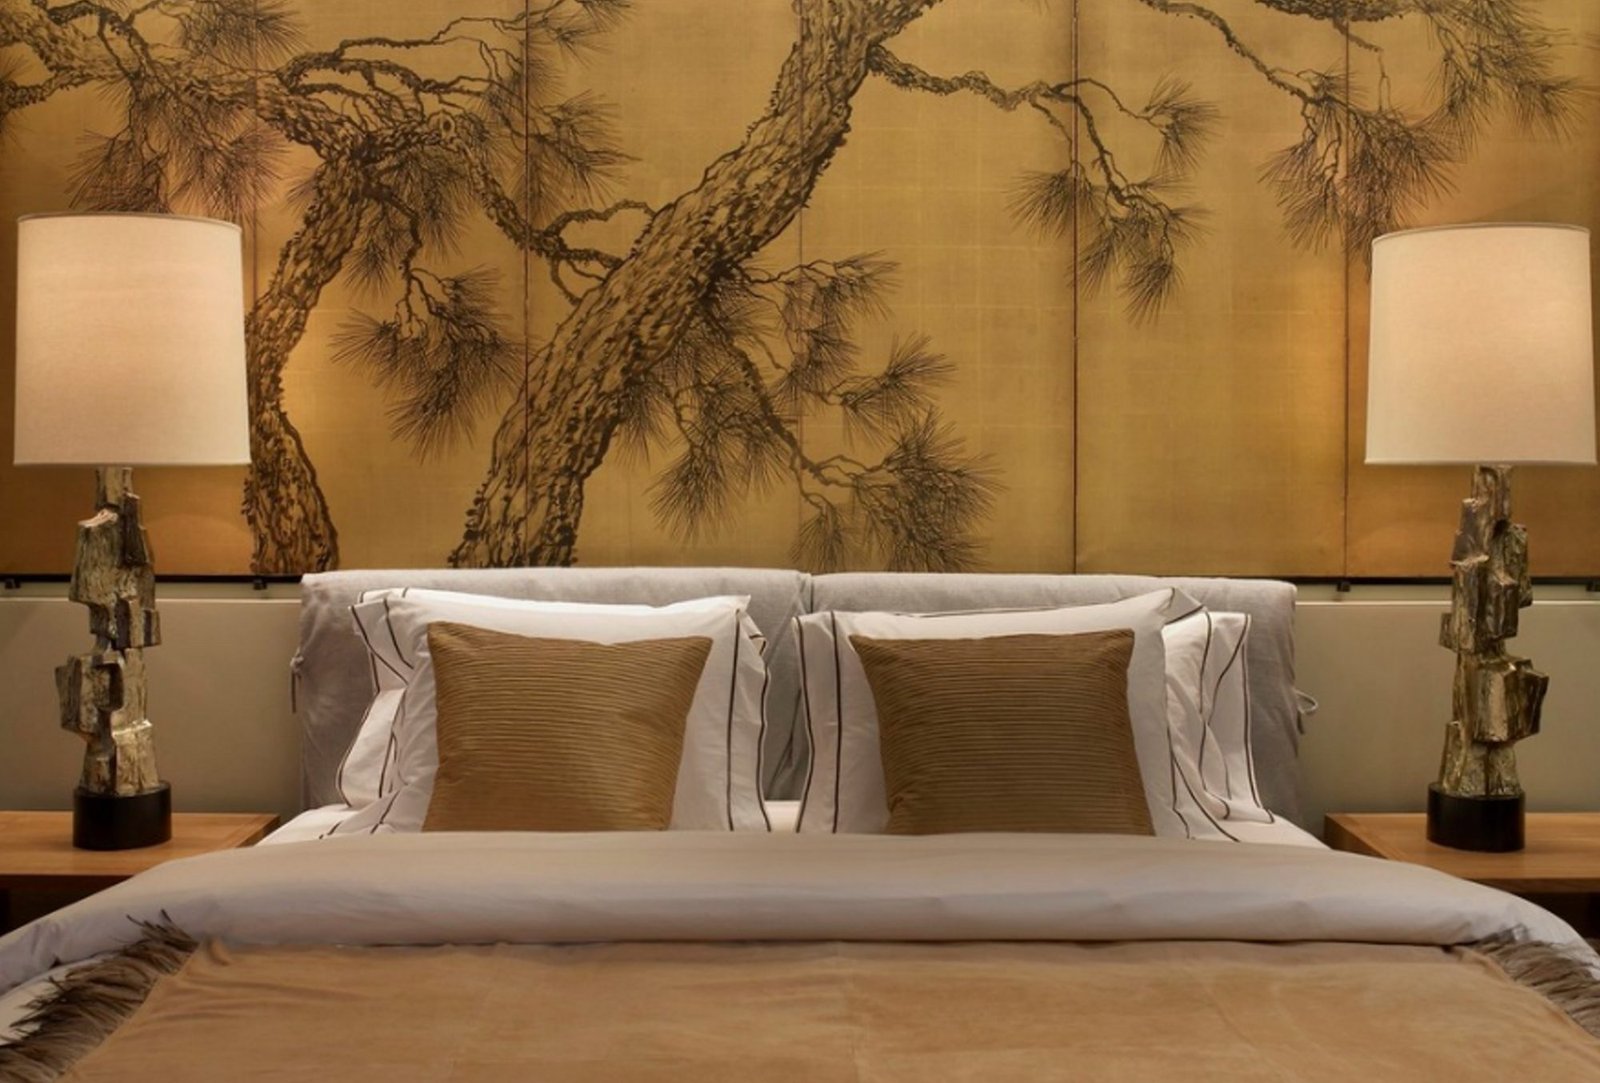 How to Decorate Your Bedroom “Zen” Style